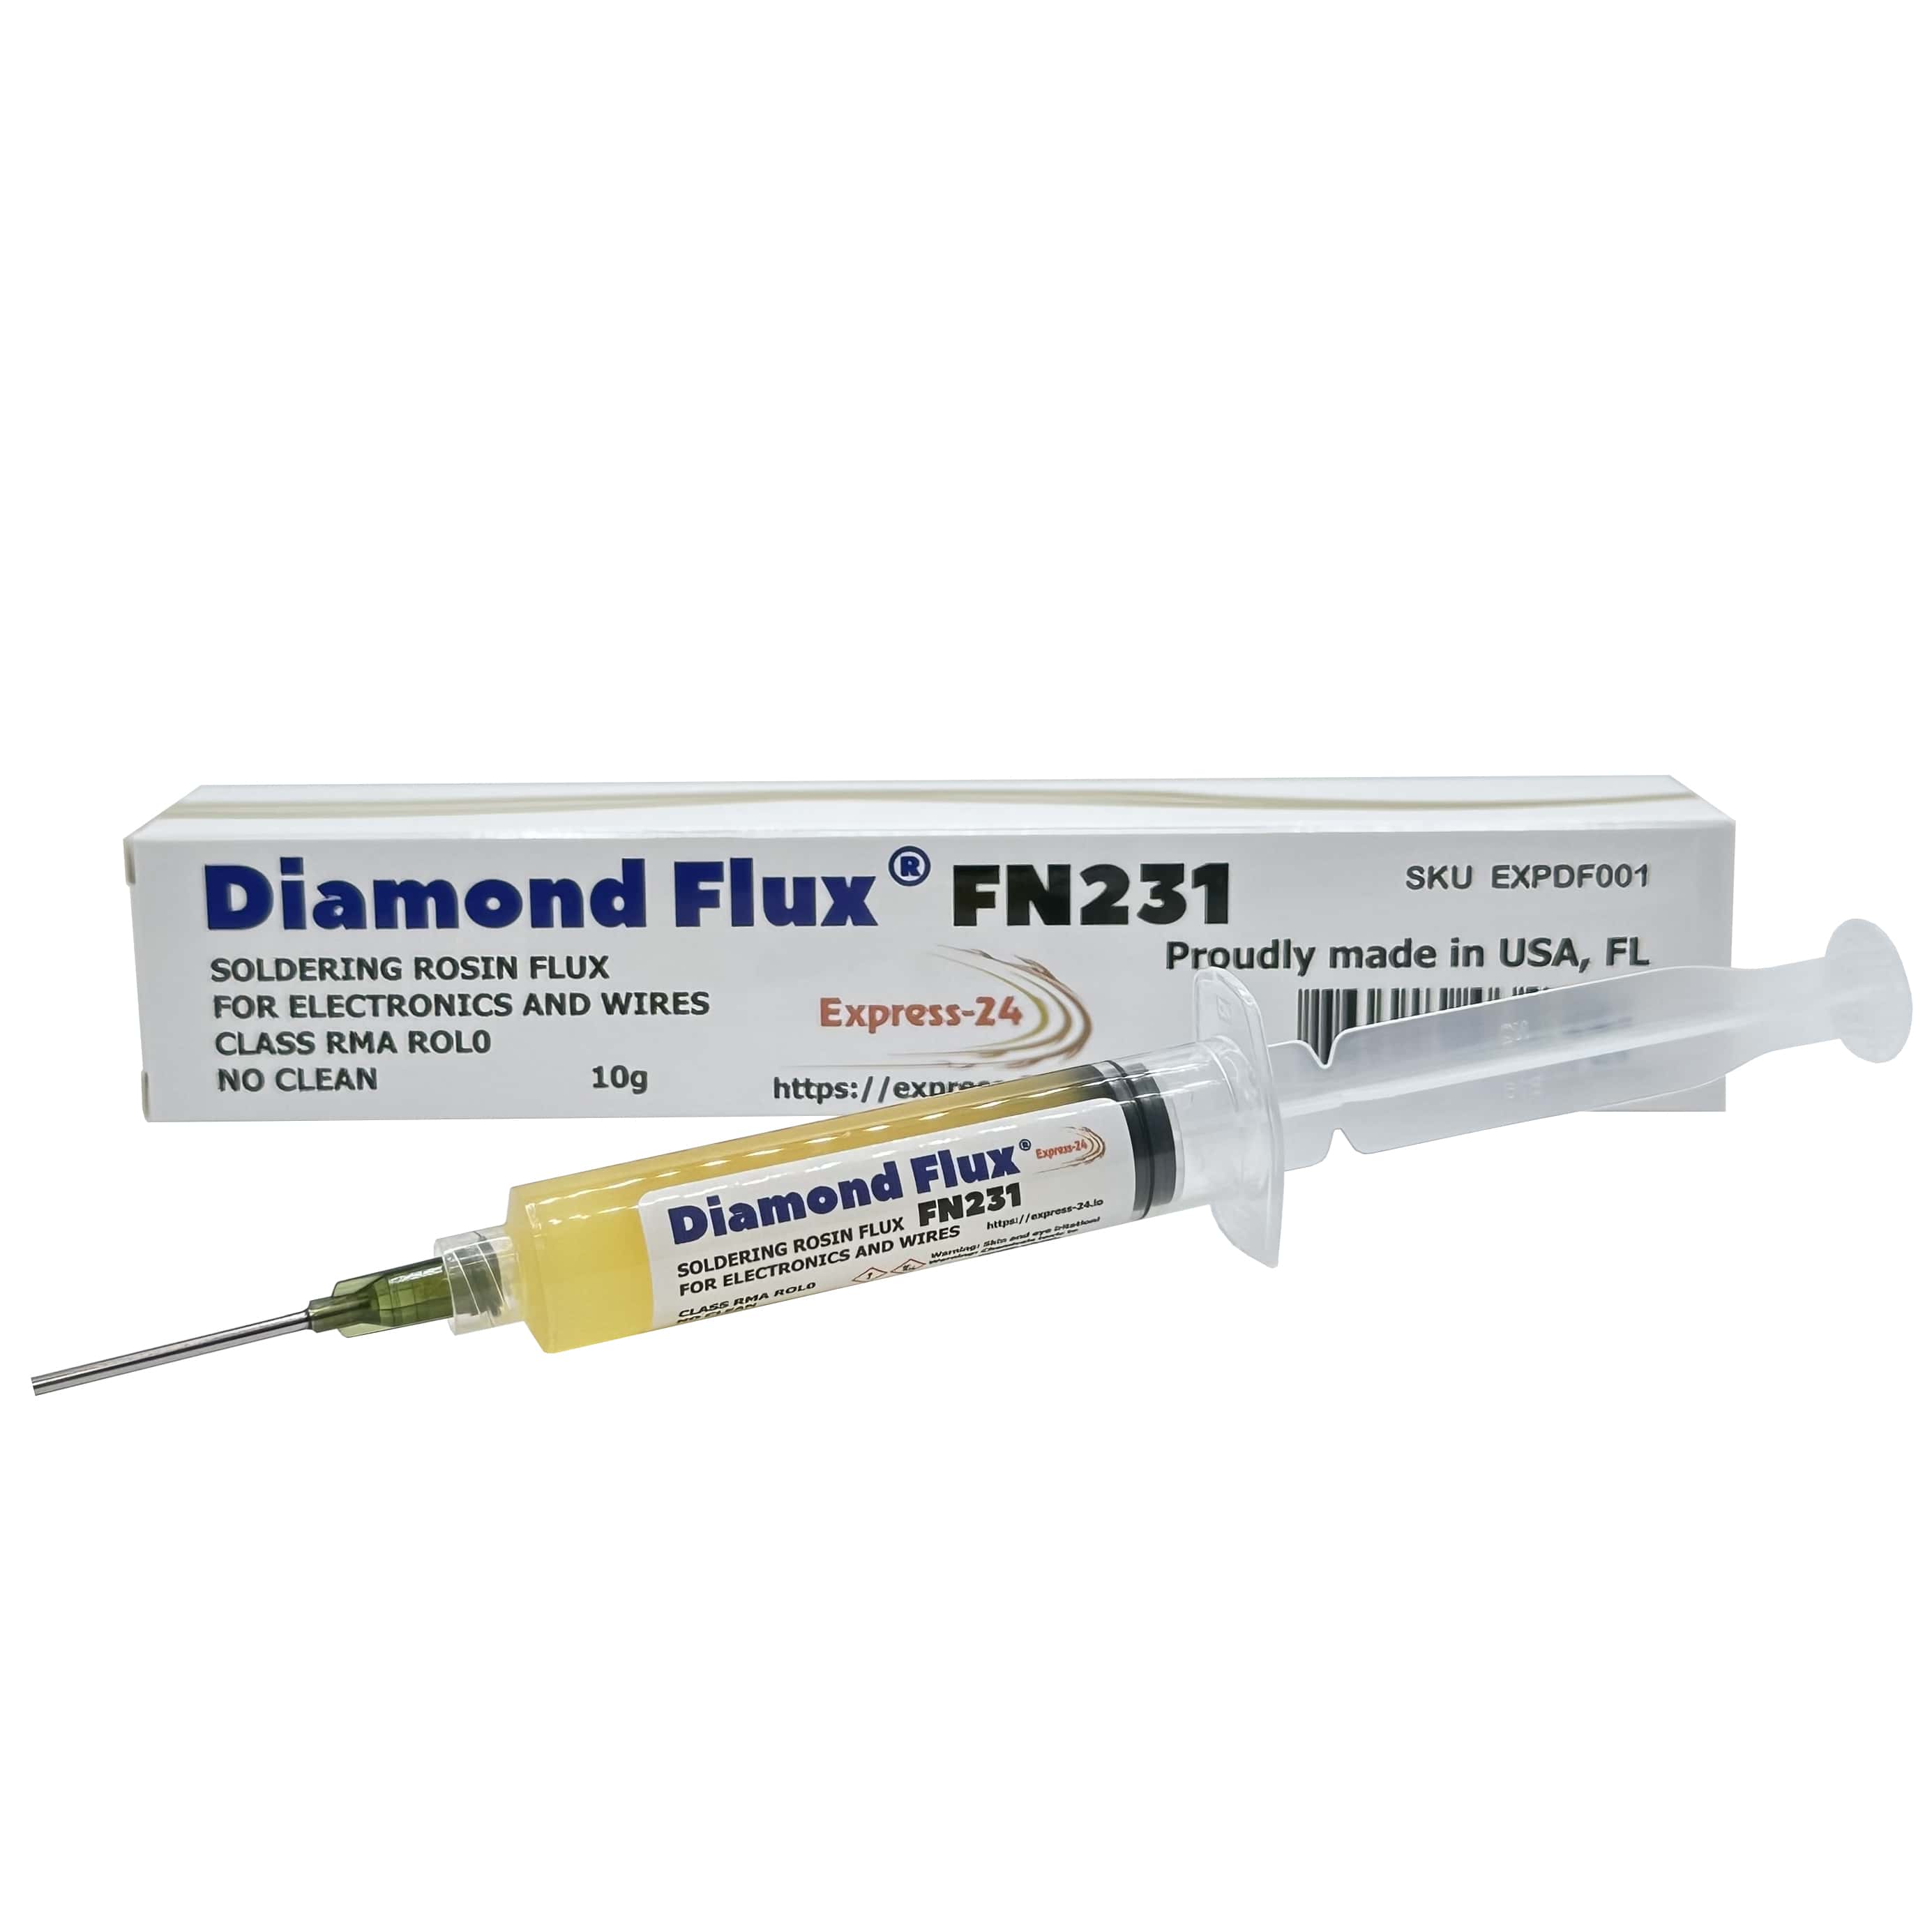 The model is Diamond Flux FN231